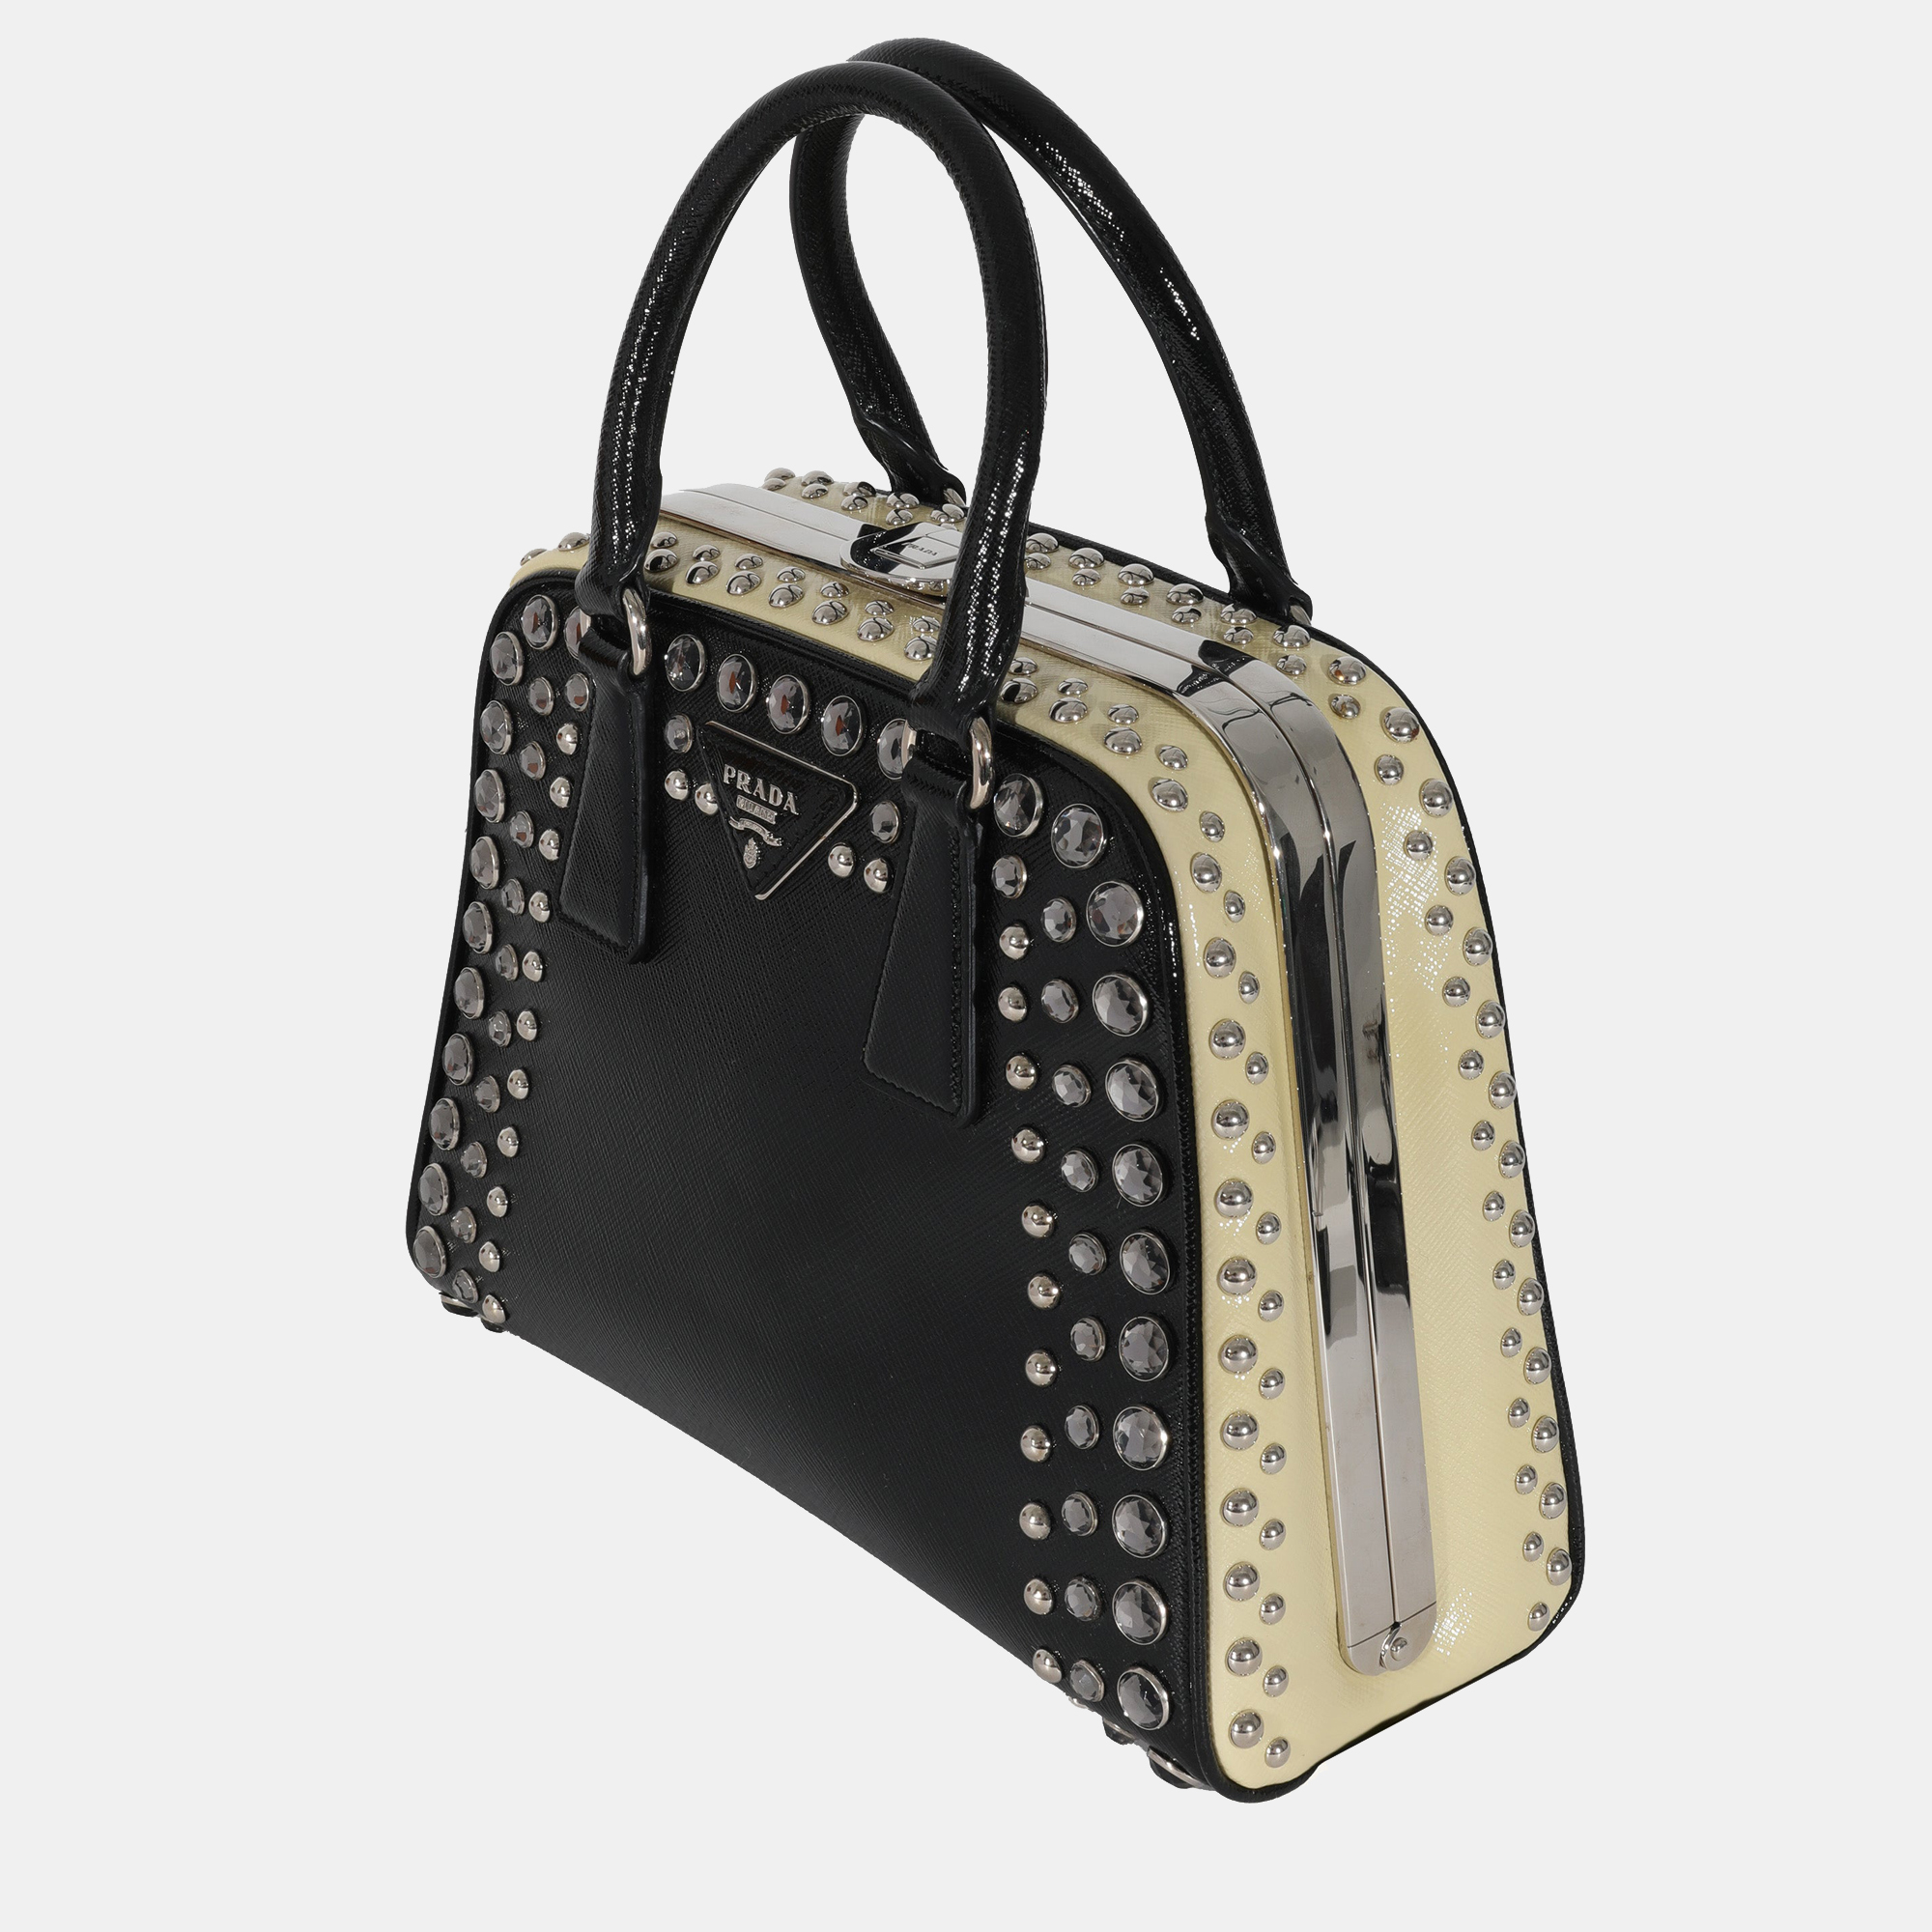 

Prada Black/White Saffiano Patent Leather Pyramid Studded Satchel Bag